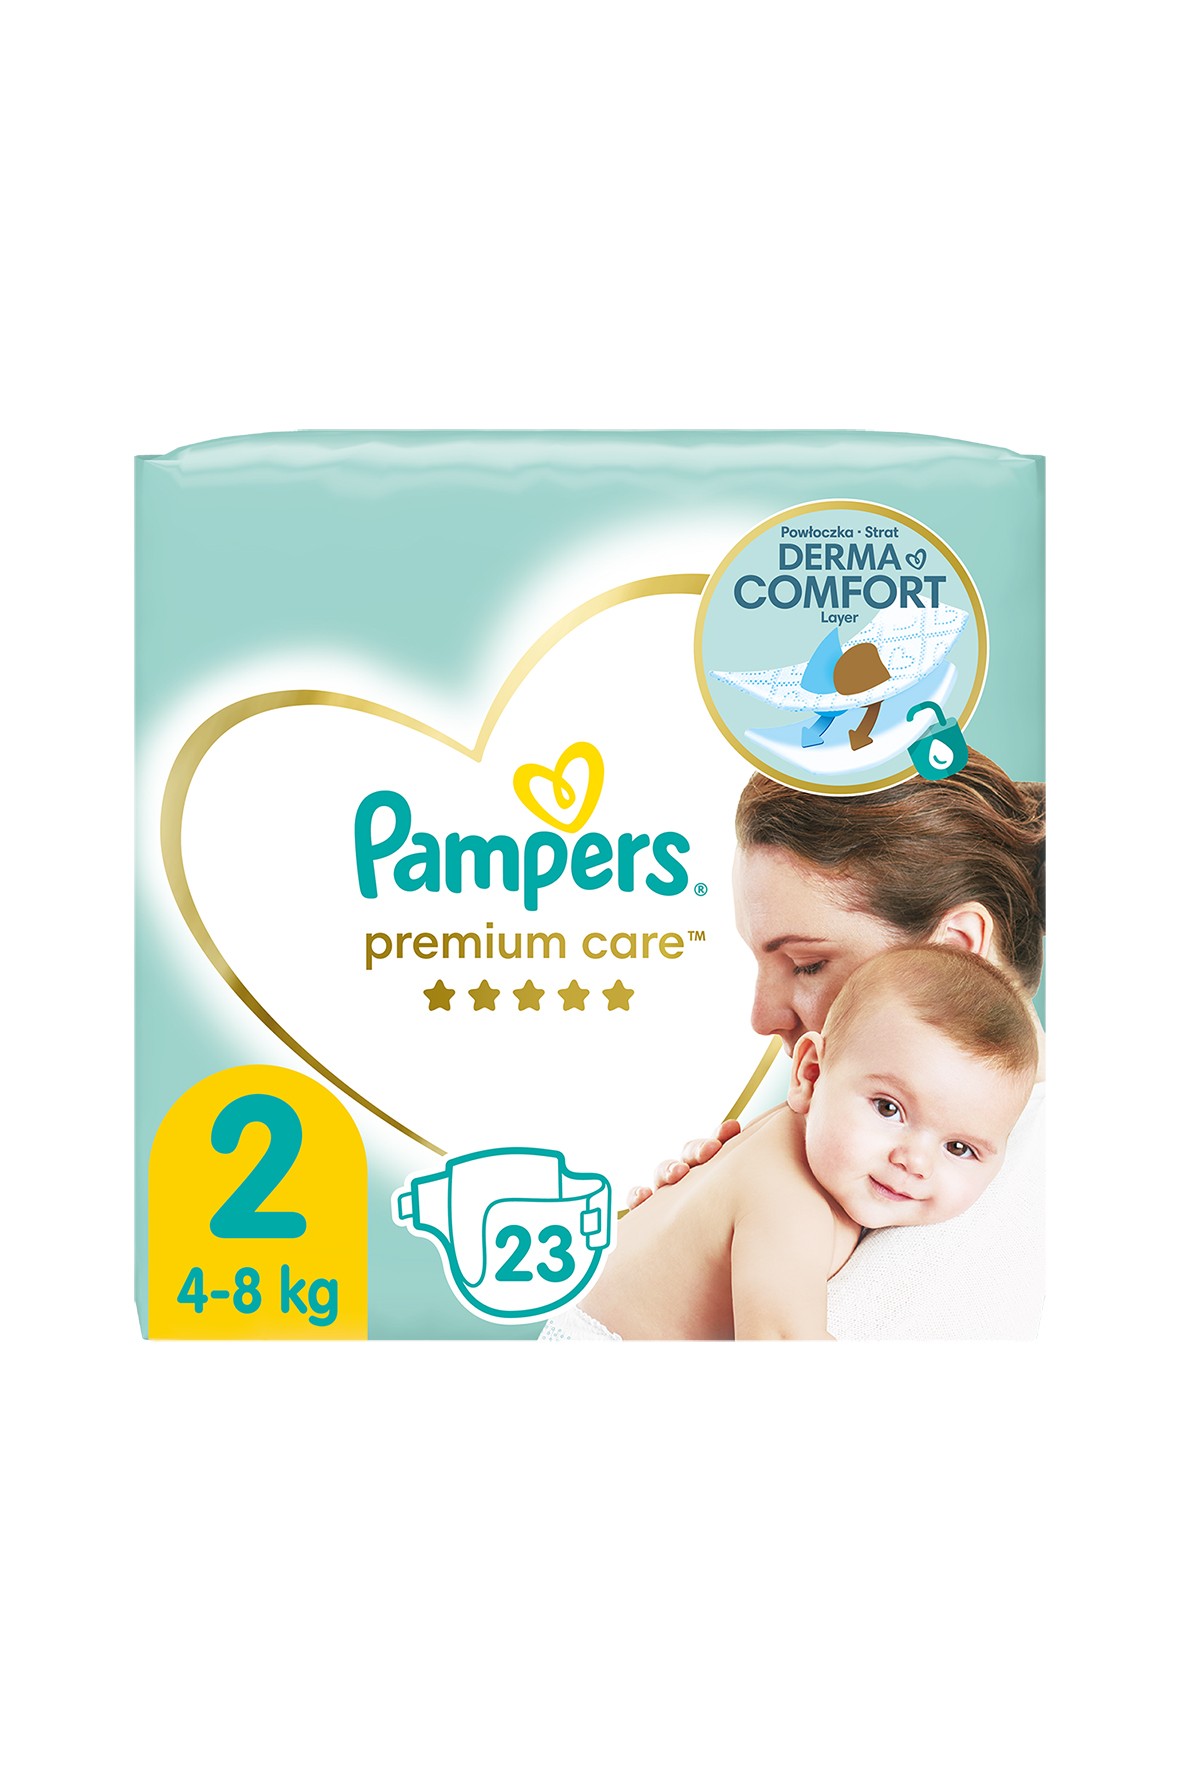 Pampers Premium Care rozmiar 2, 23 pieluszki 4-8kg